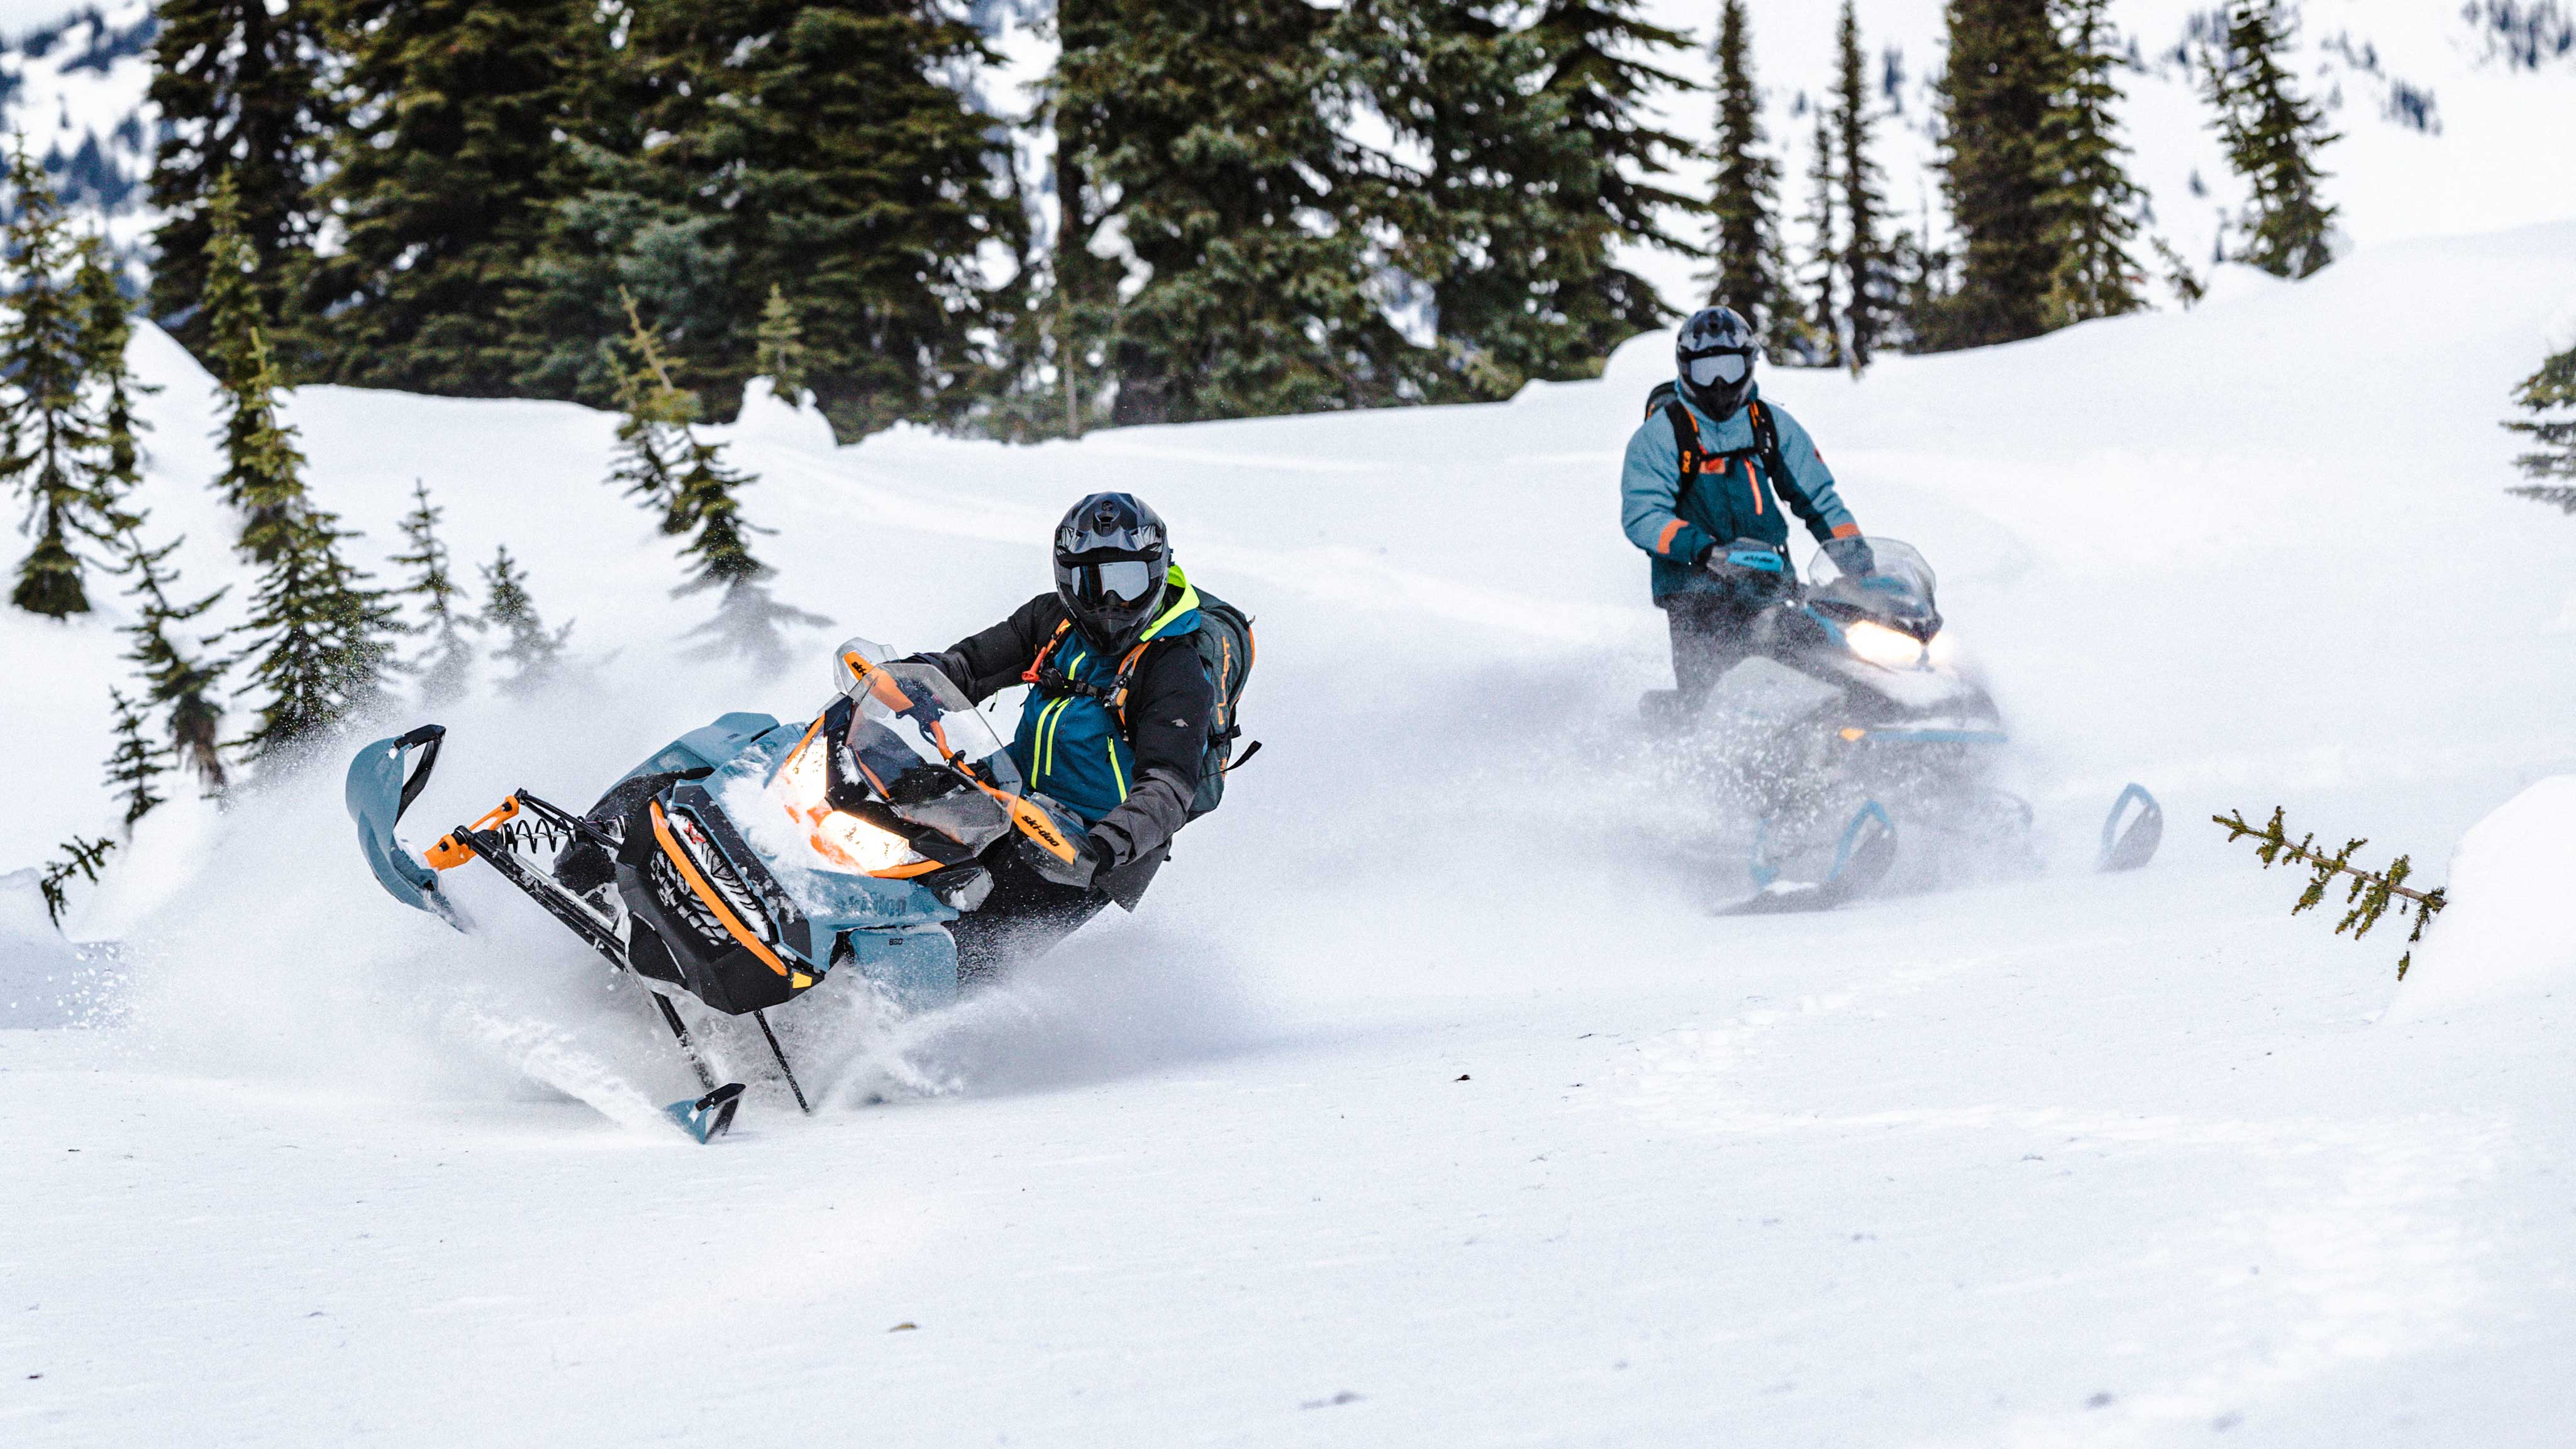 2 riders enjoying the new 2022 Ski-Doo Backcountry